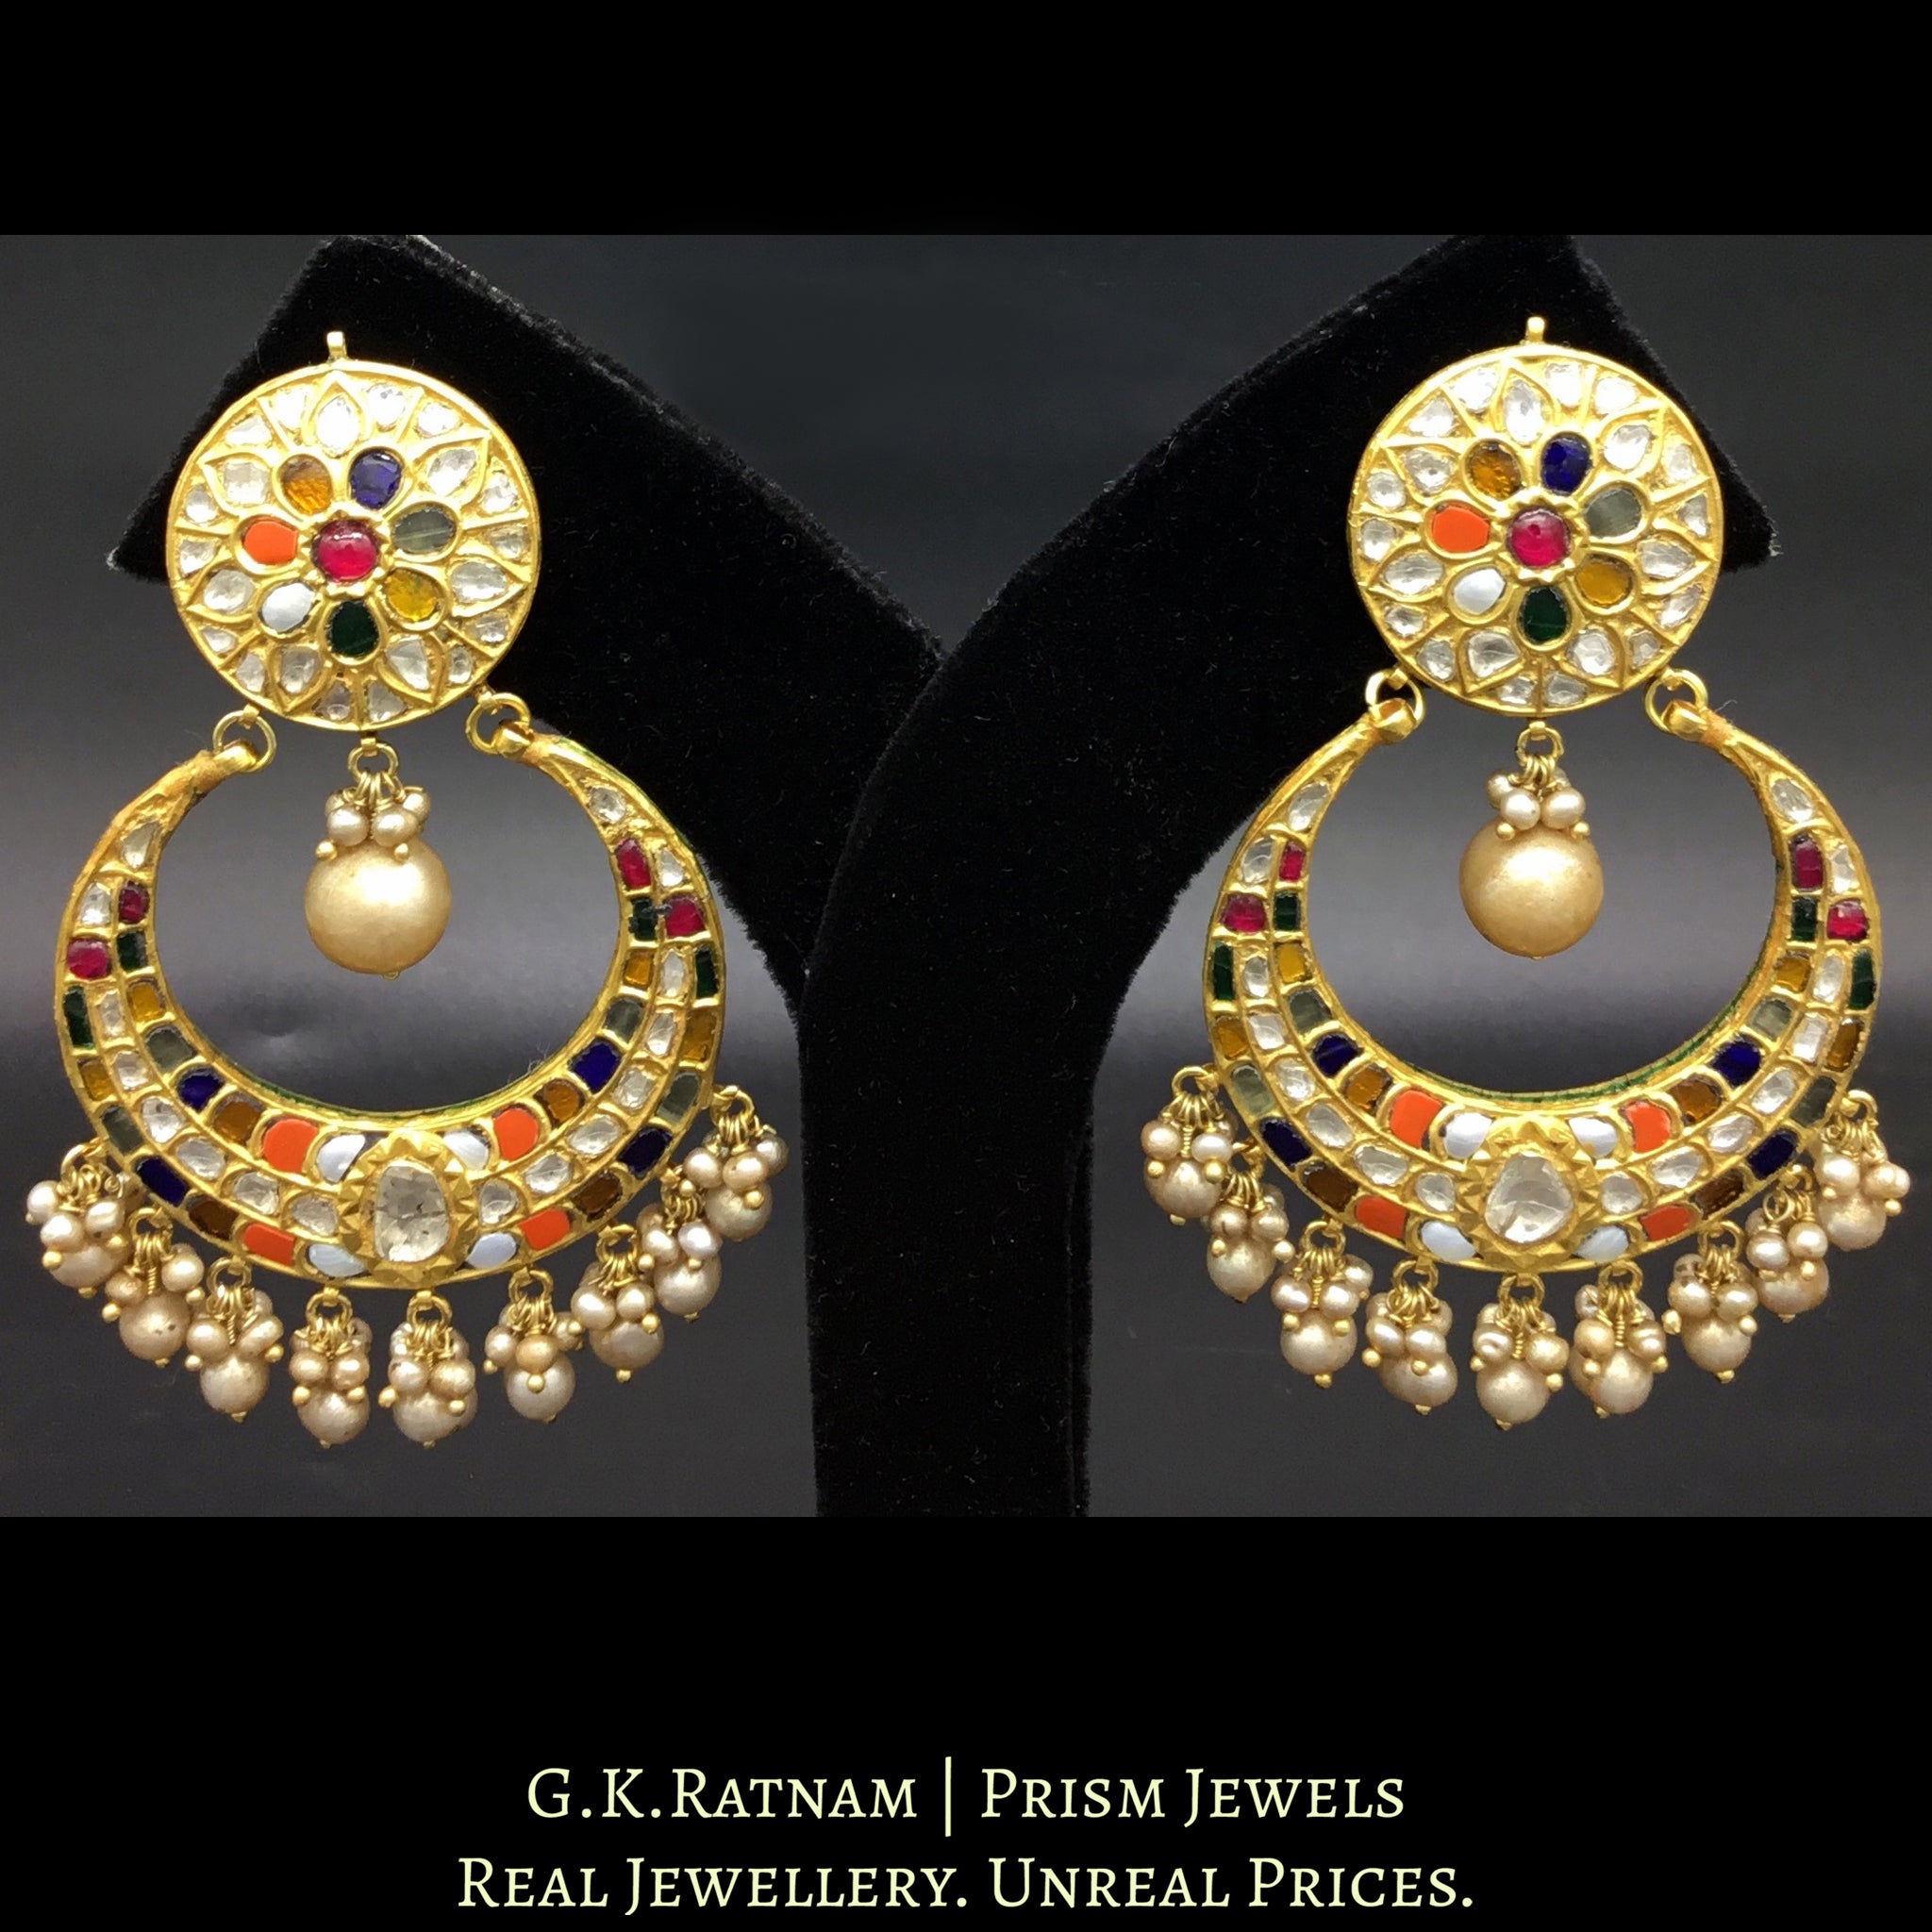 23k Gold and Diamond Polki Navratna Chand Bali Earring Pair with basra-grade hyderabadi pearls